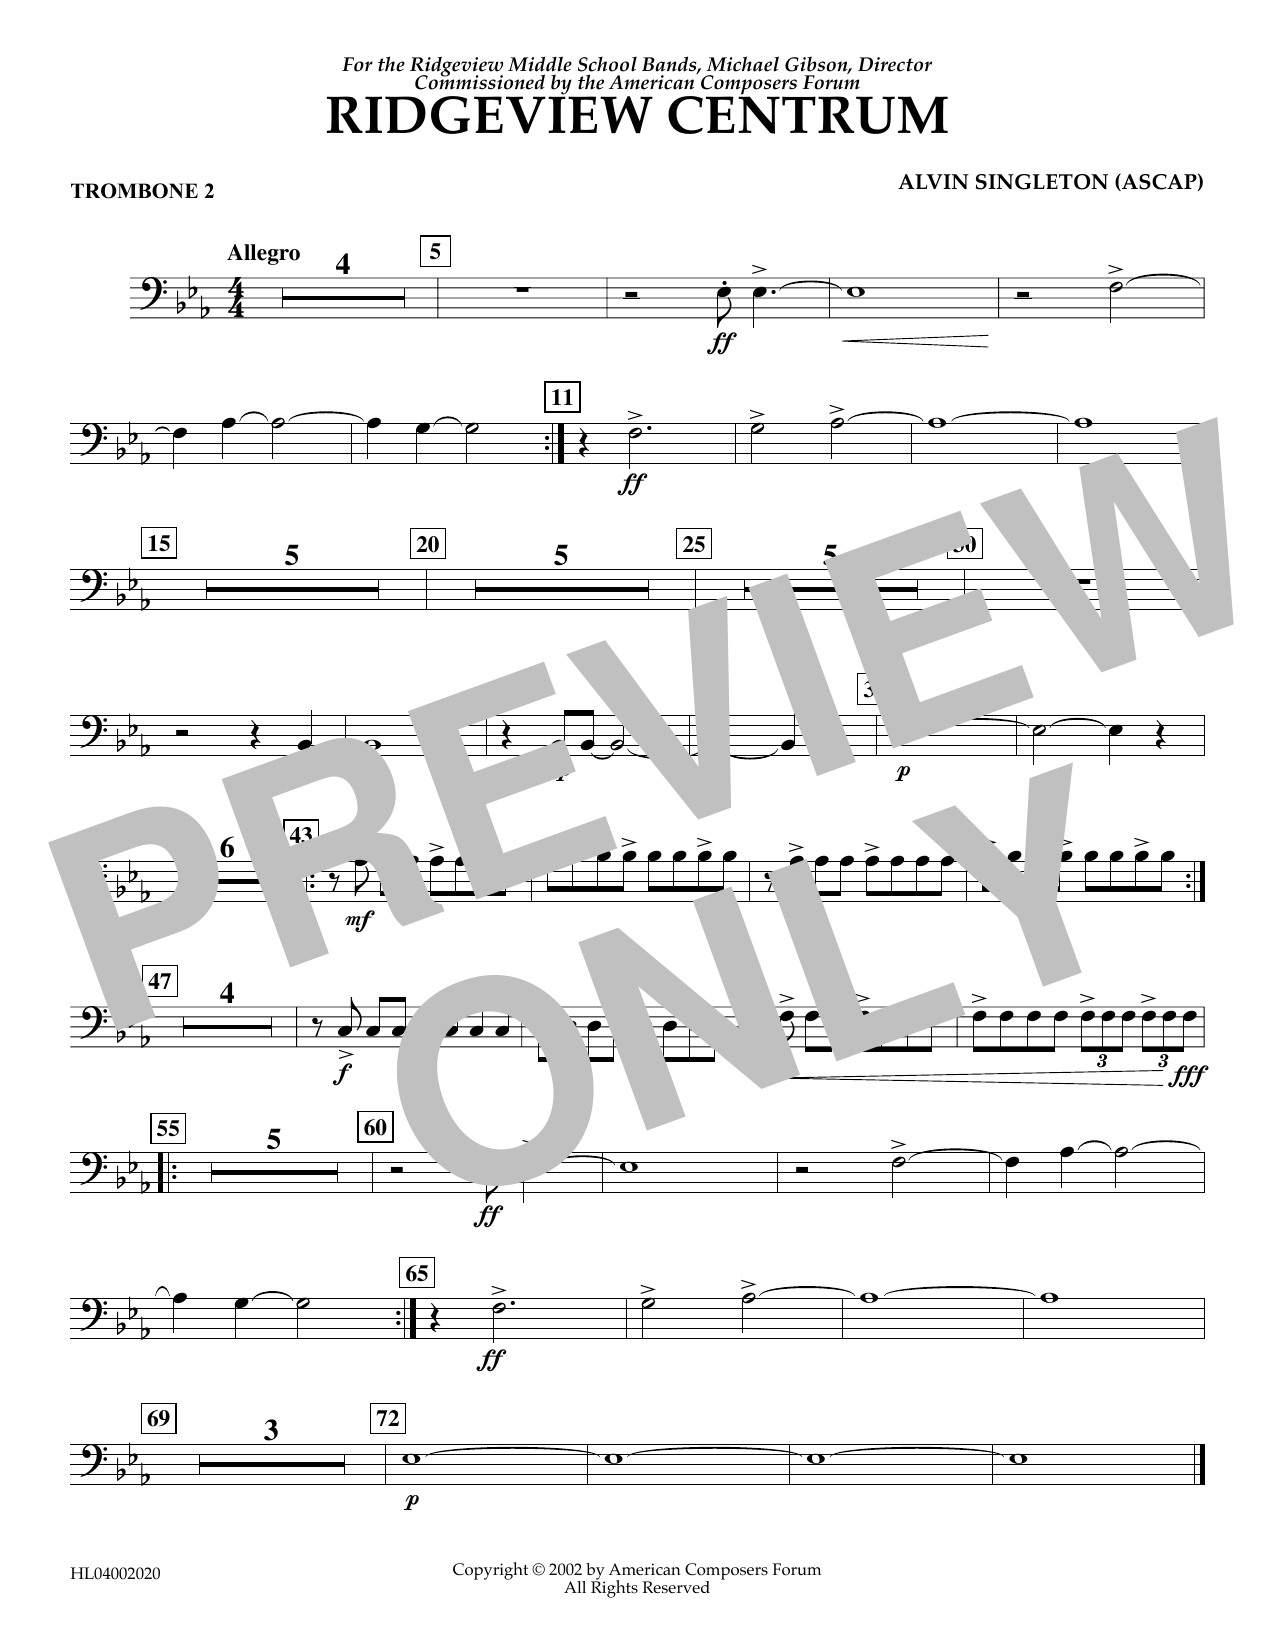 Alvin Singleton Ridgeview Centrum - Trombone 2 Sheet Music Notes & Chords for Concert Band - Download or Print PDF